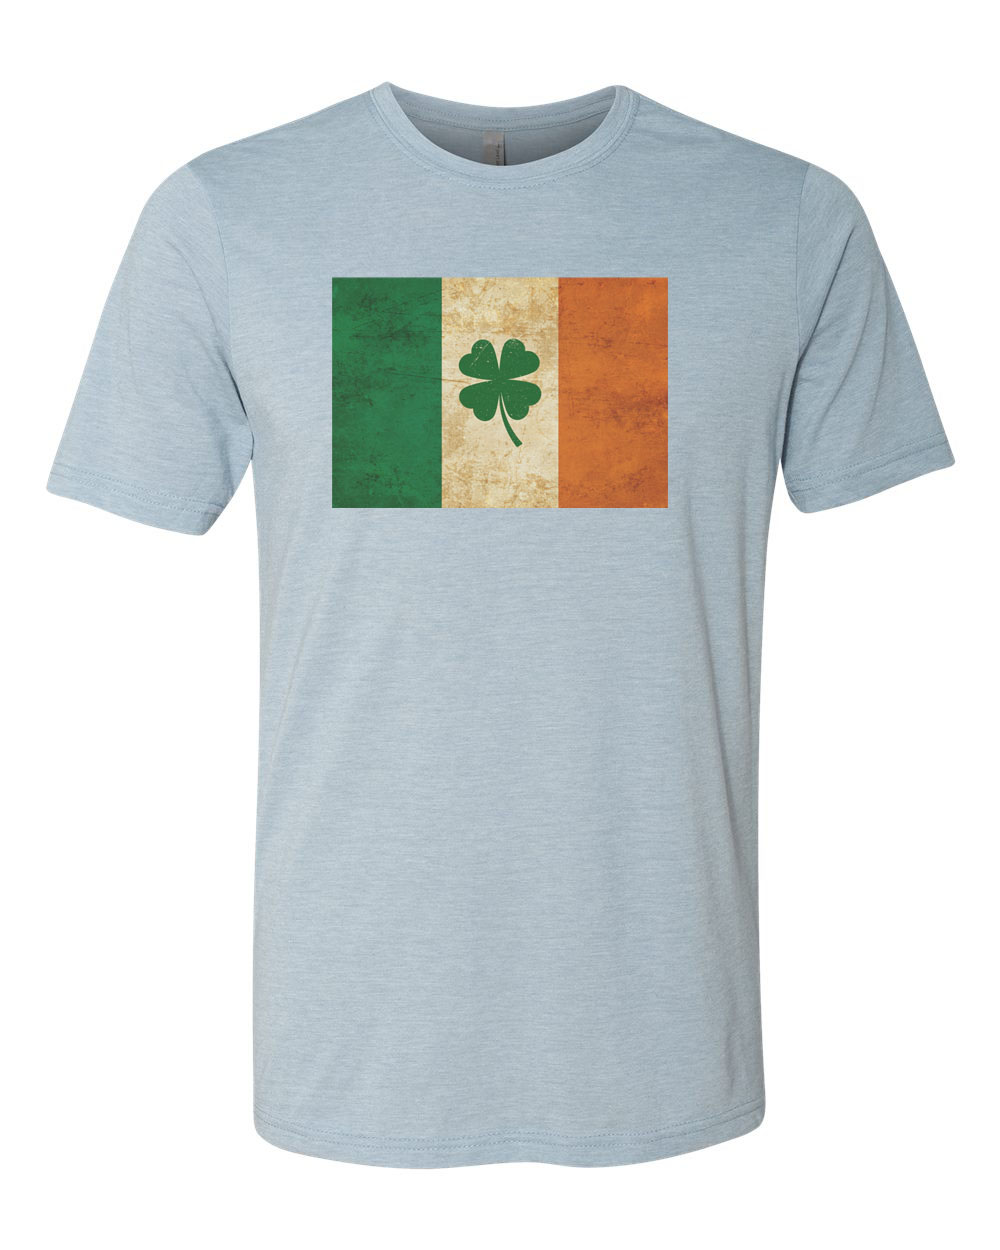 St. Patricks Day Shirt, Shamrock Shirt, Irish Flag, Ireland Shirt, Unisex Fit, Irish Shirt, Shamrock, Irish Flag Shirt, St Patty's Shirt, Stonewash Denim, MEDIUM - image 1 of 1